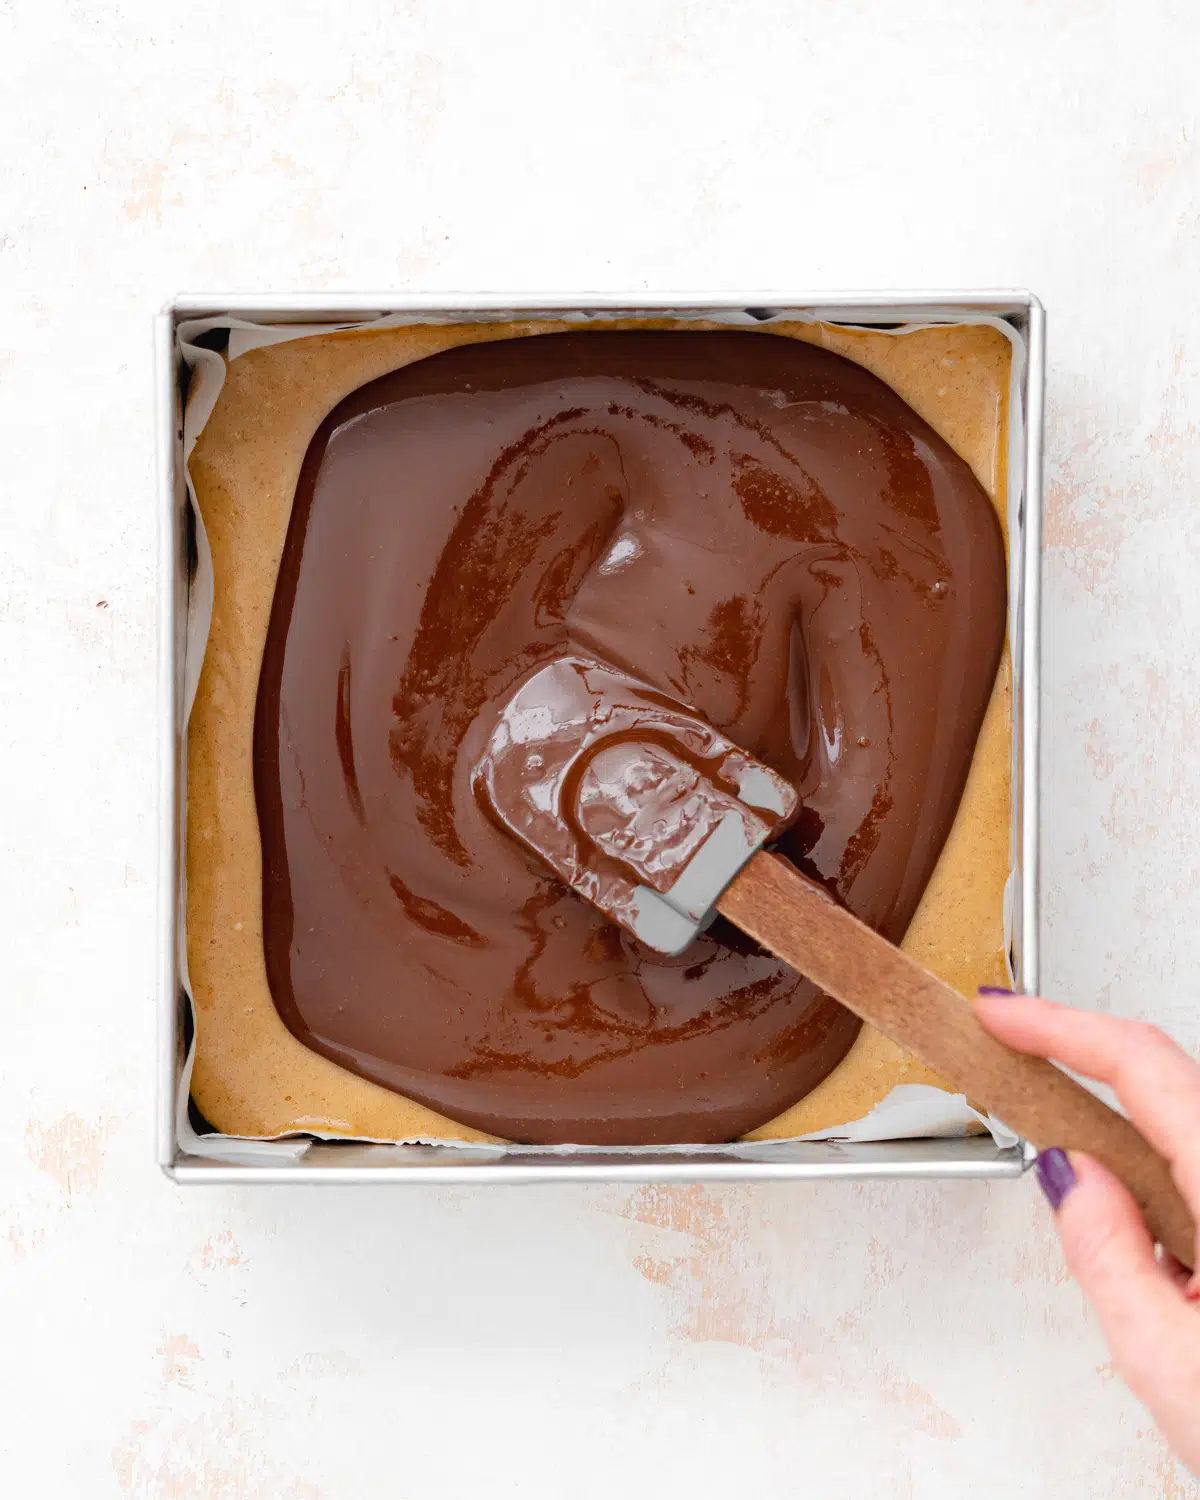 covering vegan caramel brownies with chocolate.